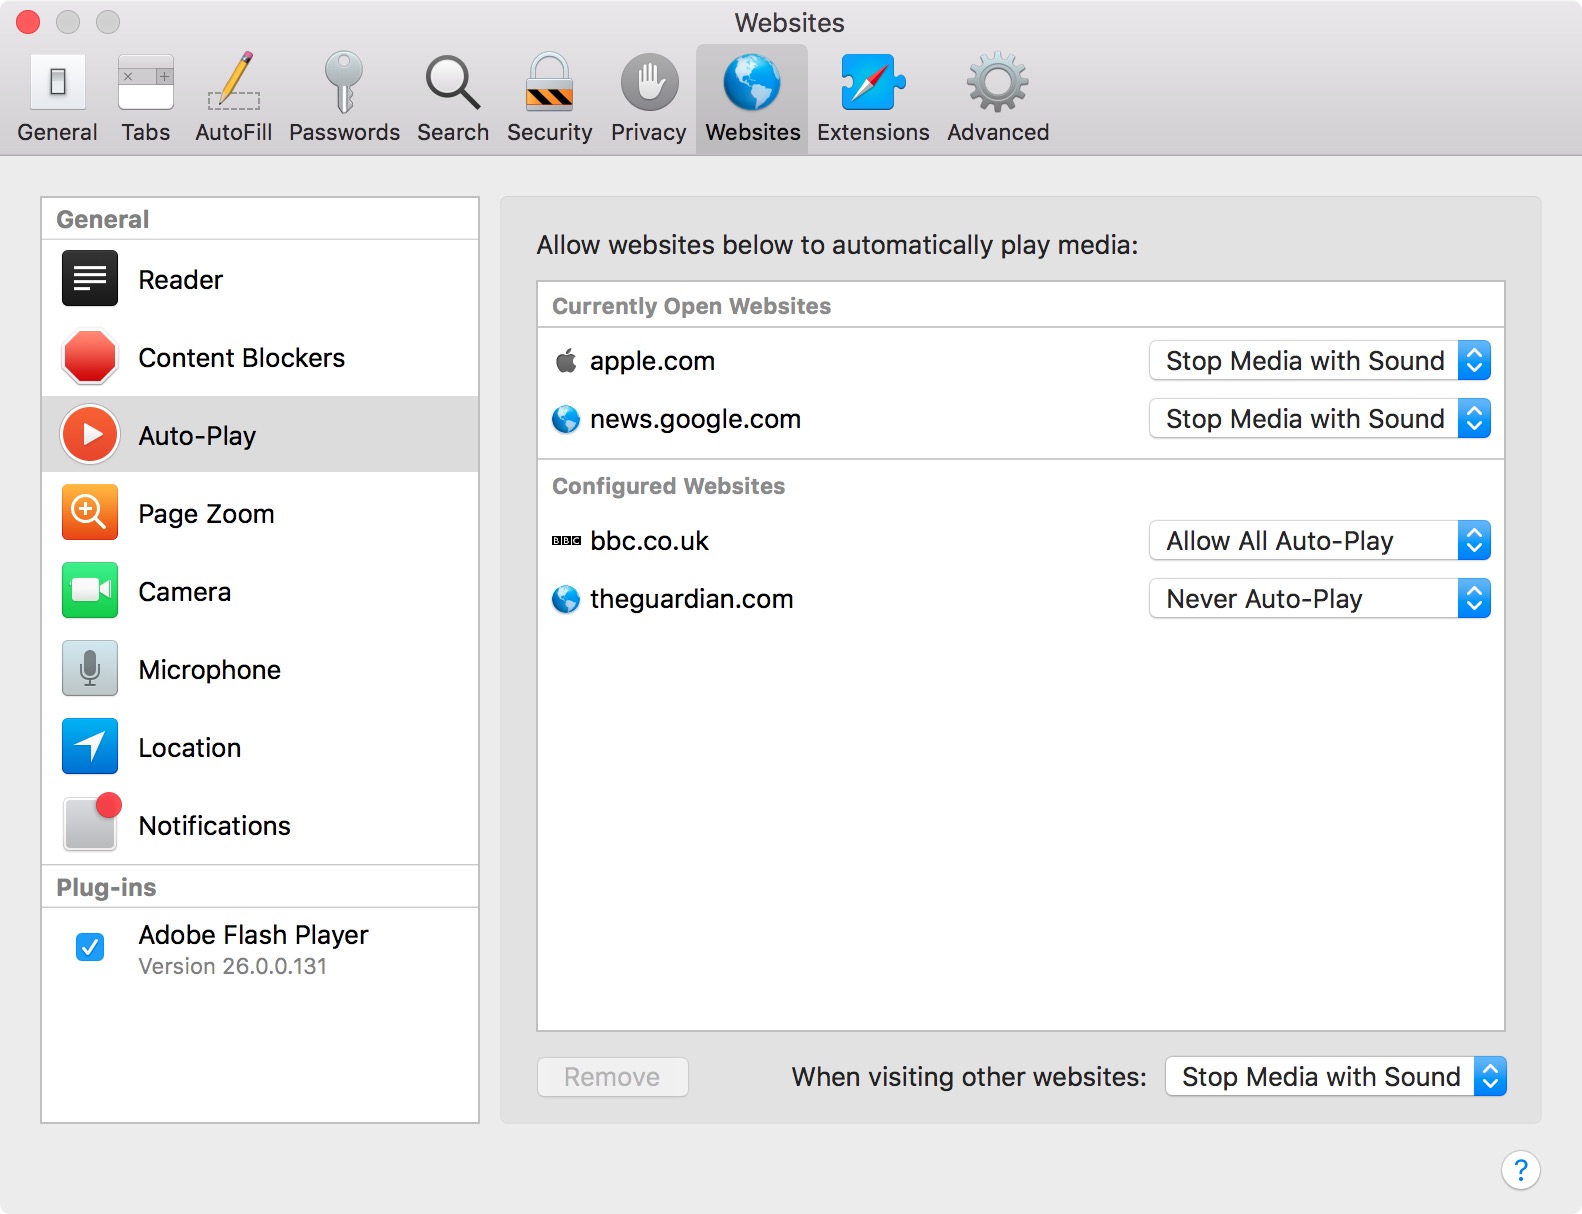 upgrade safari for mac 10.8.5